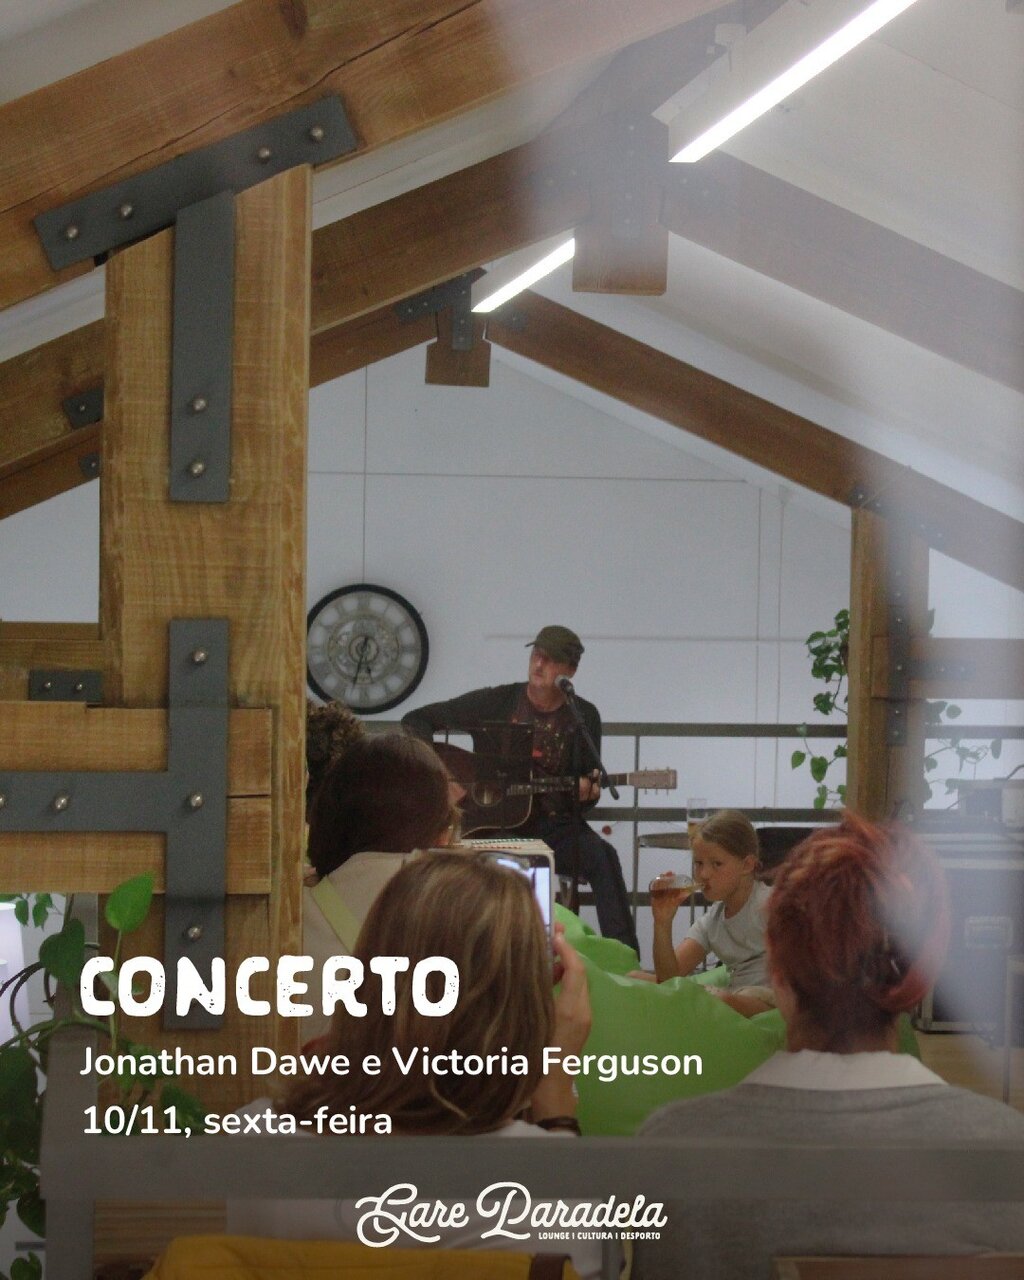 10 nov - Concerto no Gare Paradela - Jonathan Dawe e Victoria furguson